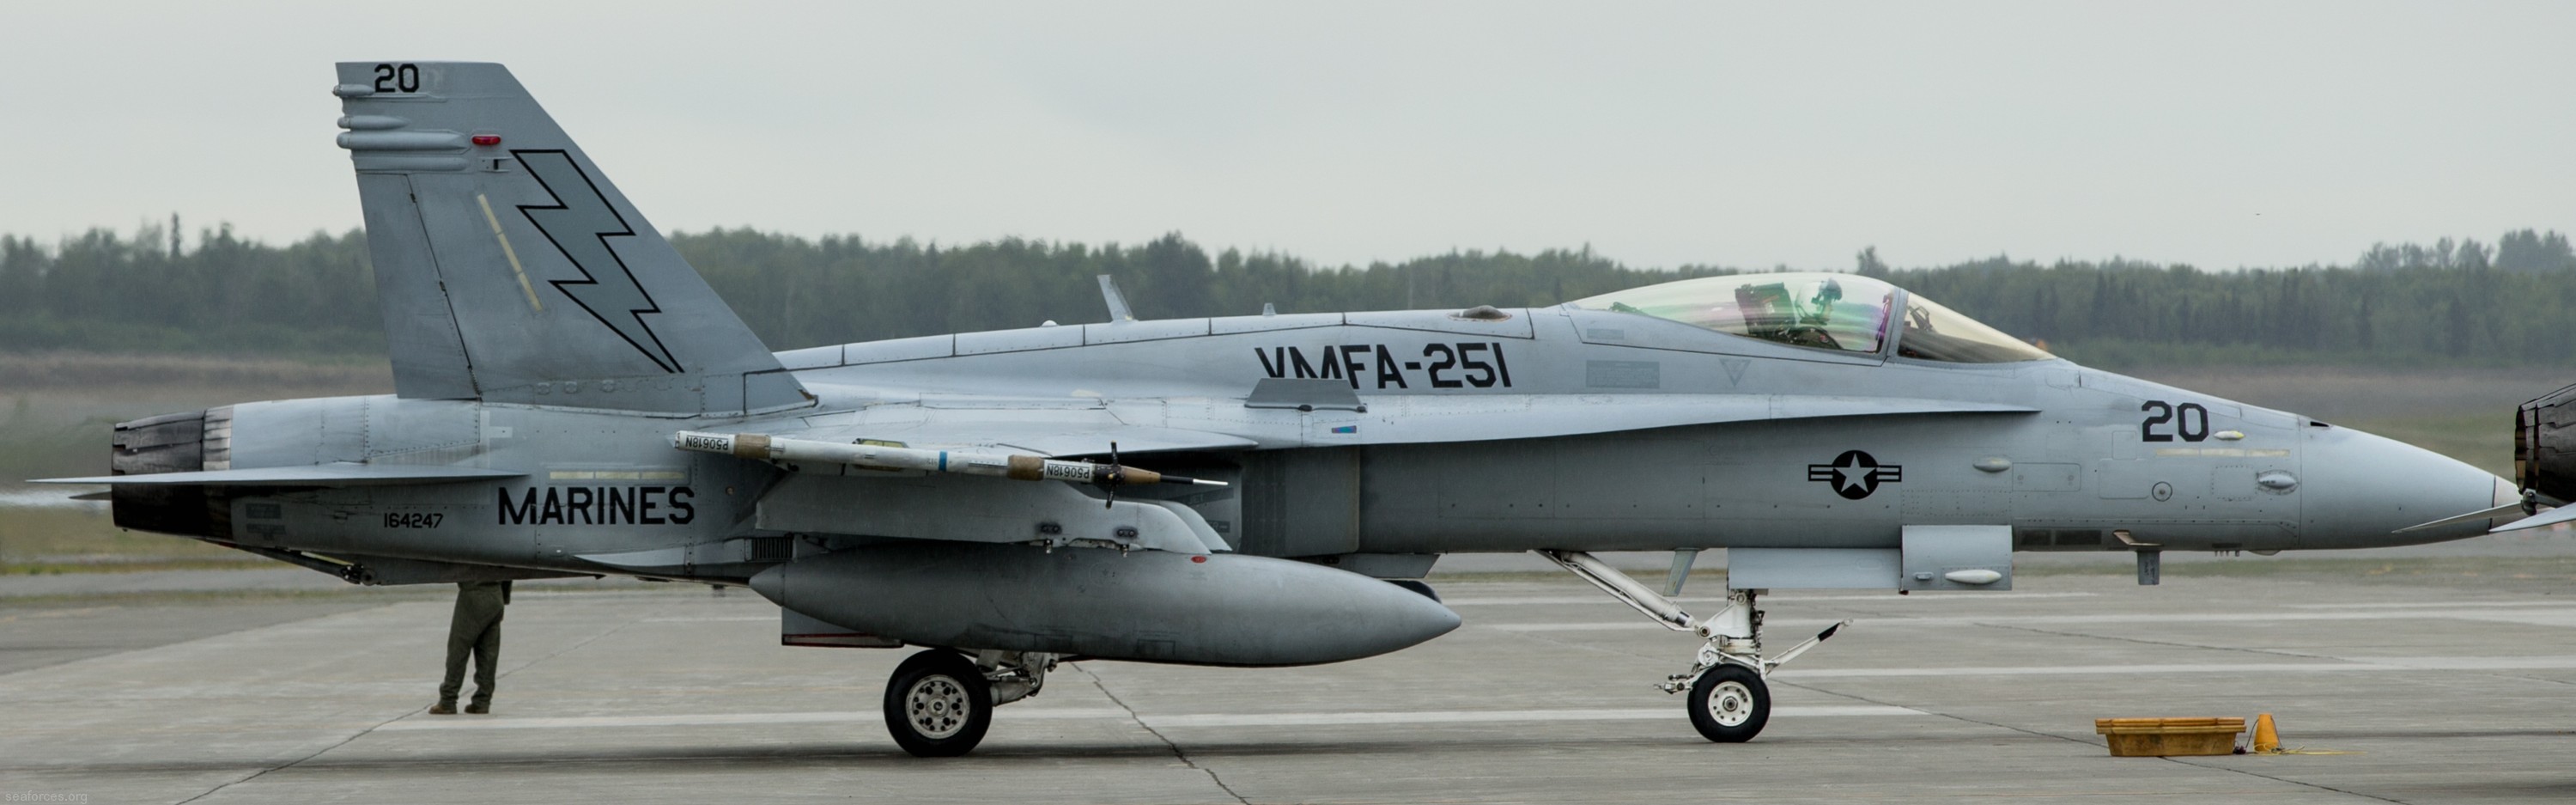 vmfa-251 thunderbolts marine fighter attack squadron f/a-18c hornet 108 red flag alaska rfa 17-2